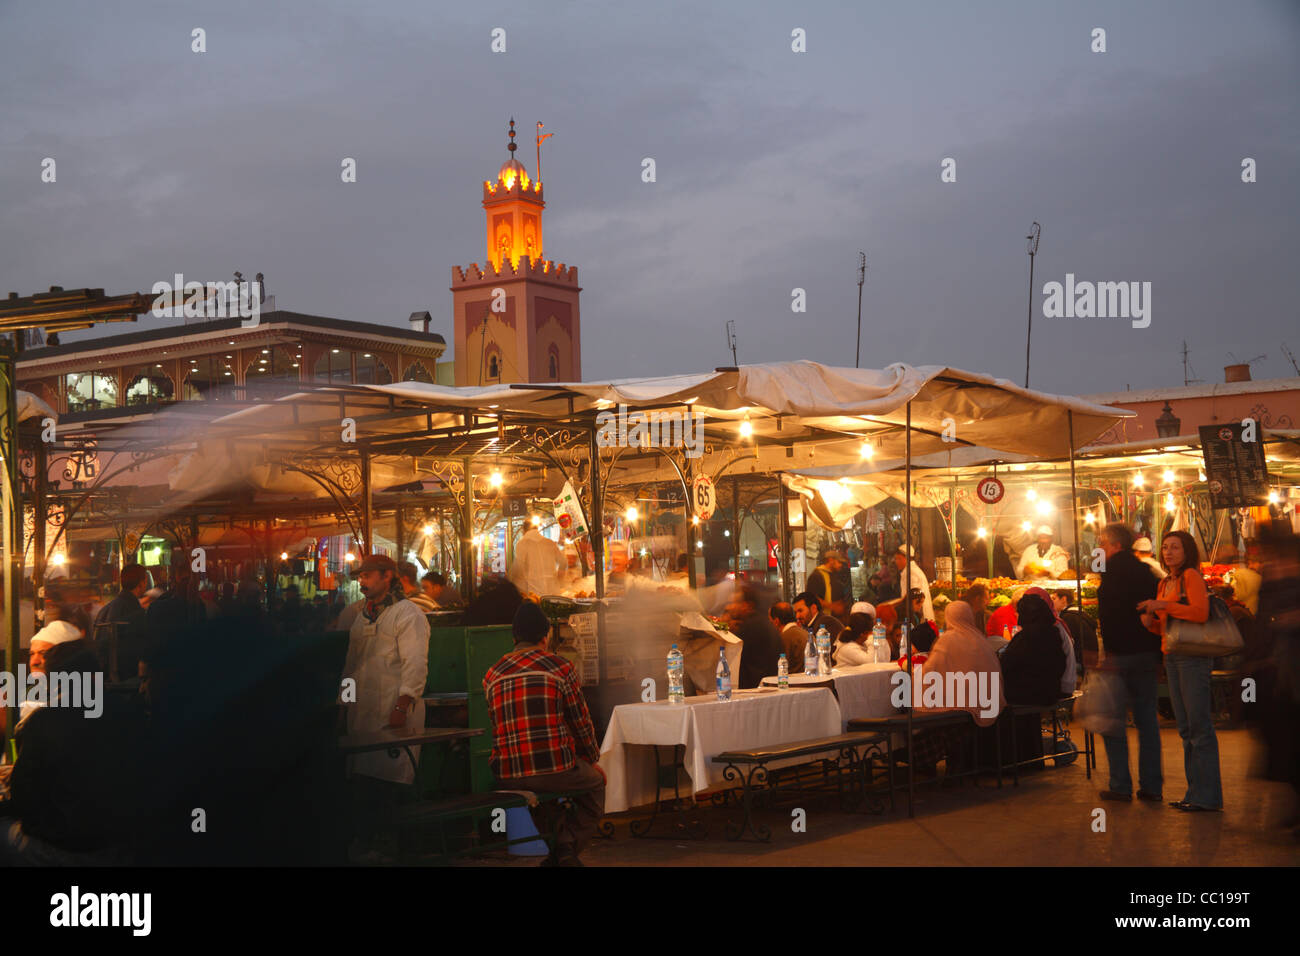 Djemaa el fna square at dusk, Marrakech, Morocco Stock Photo